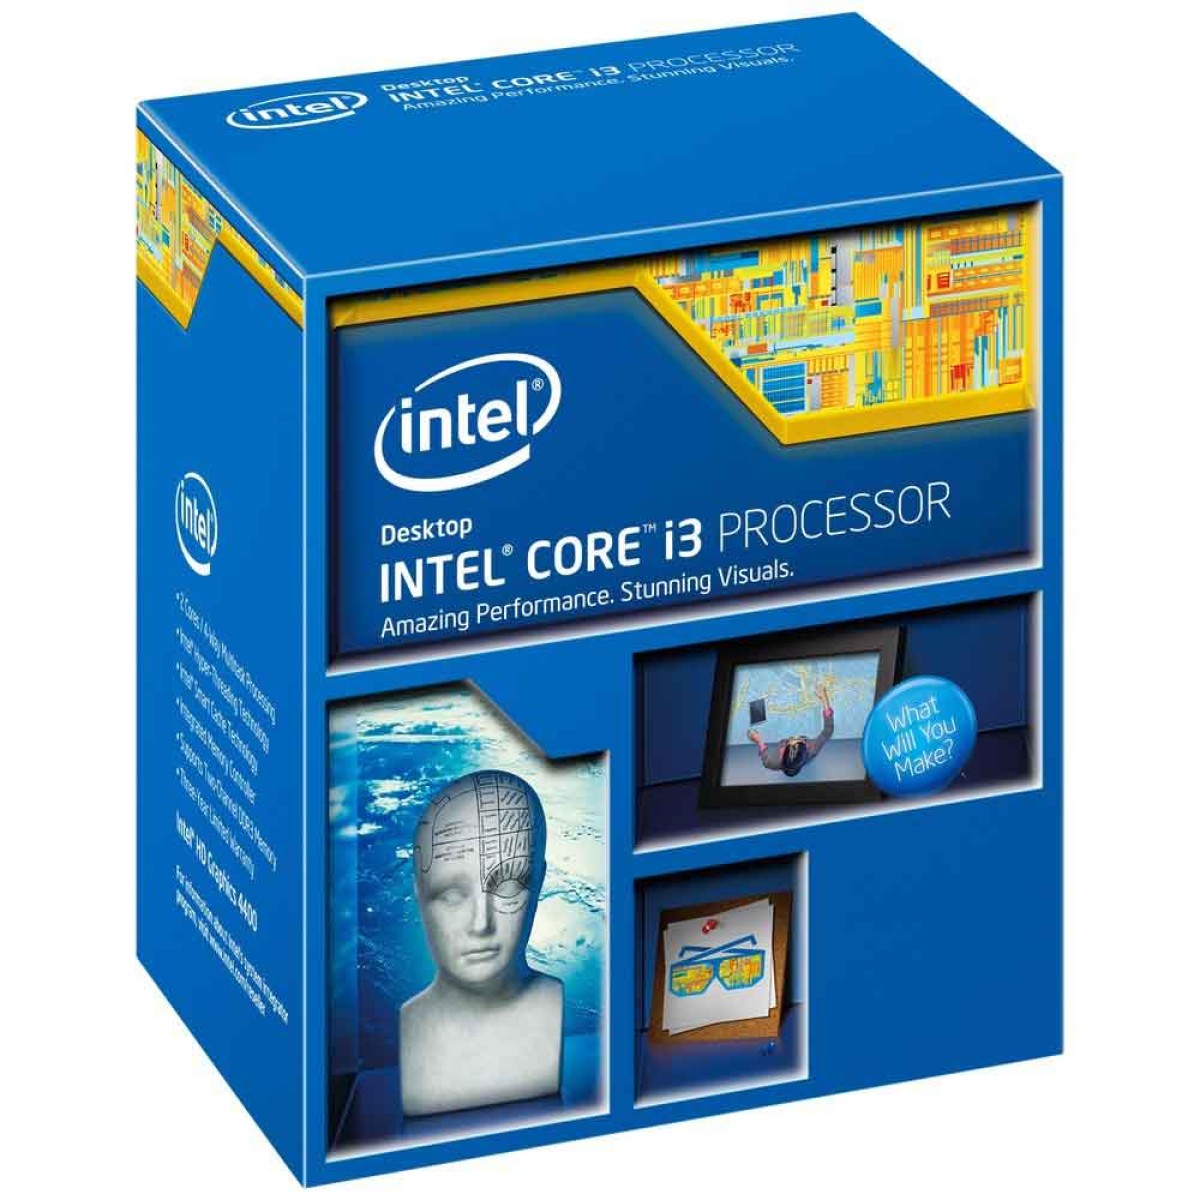 Intel Core i3 4150 Processor